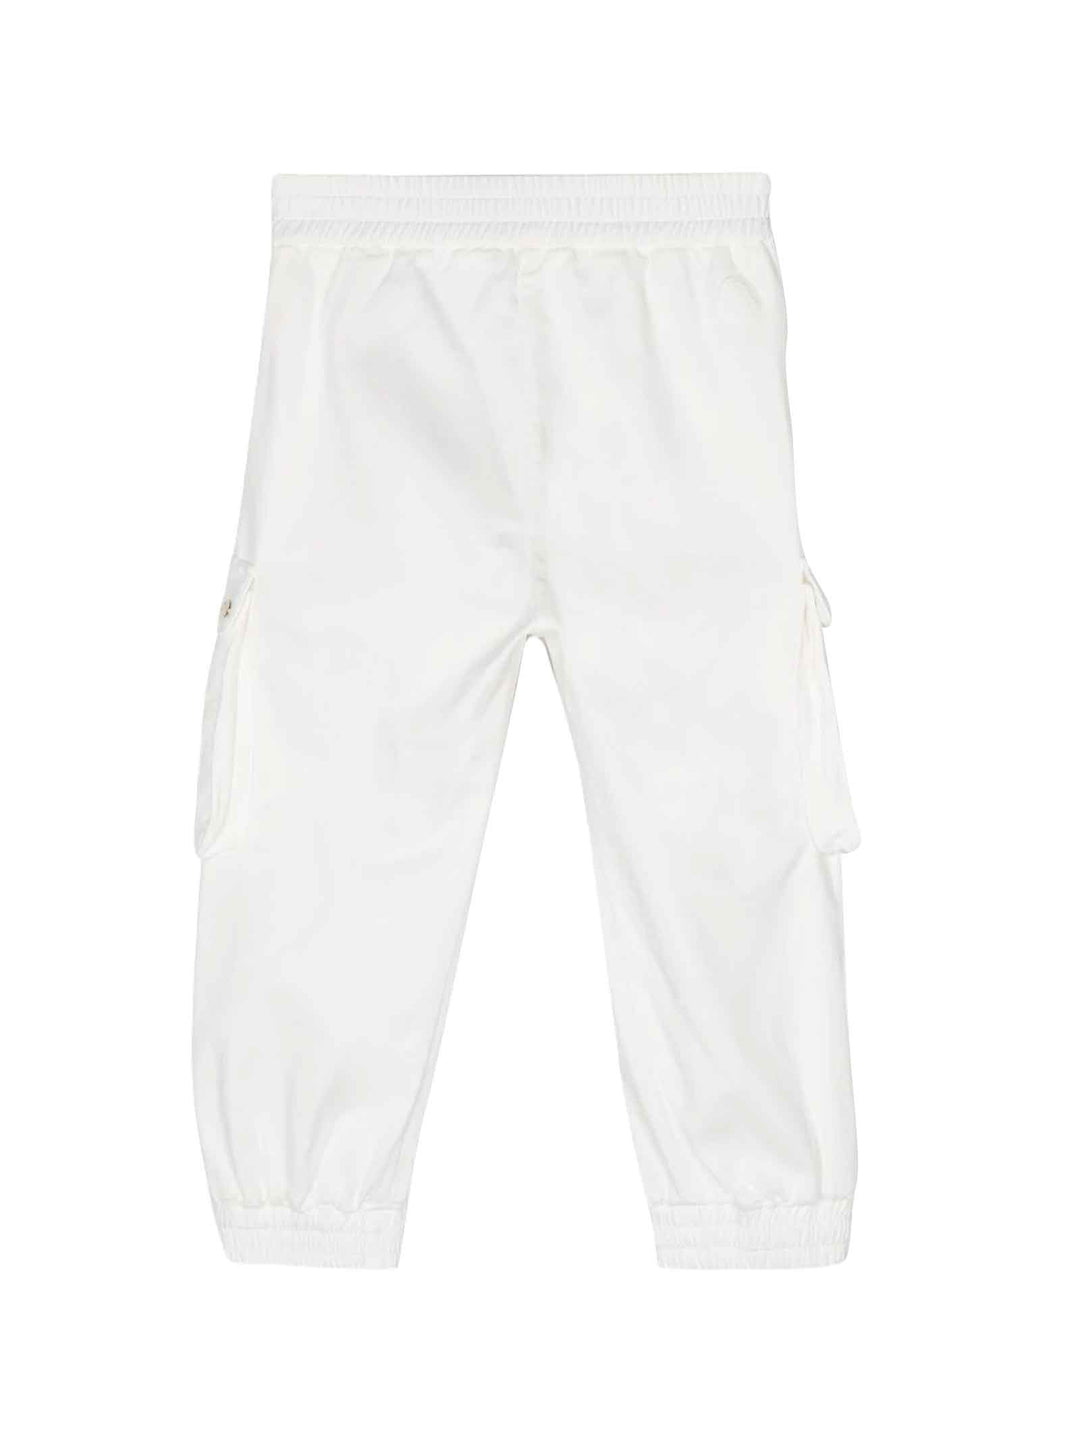 Pantalon blanc unisexe